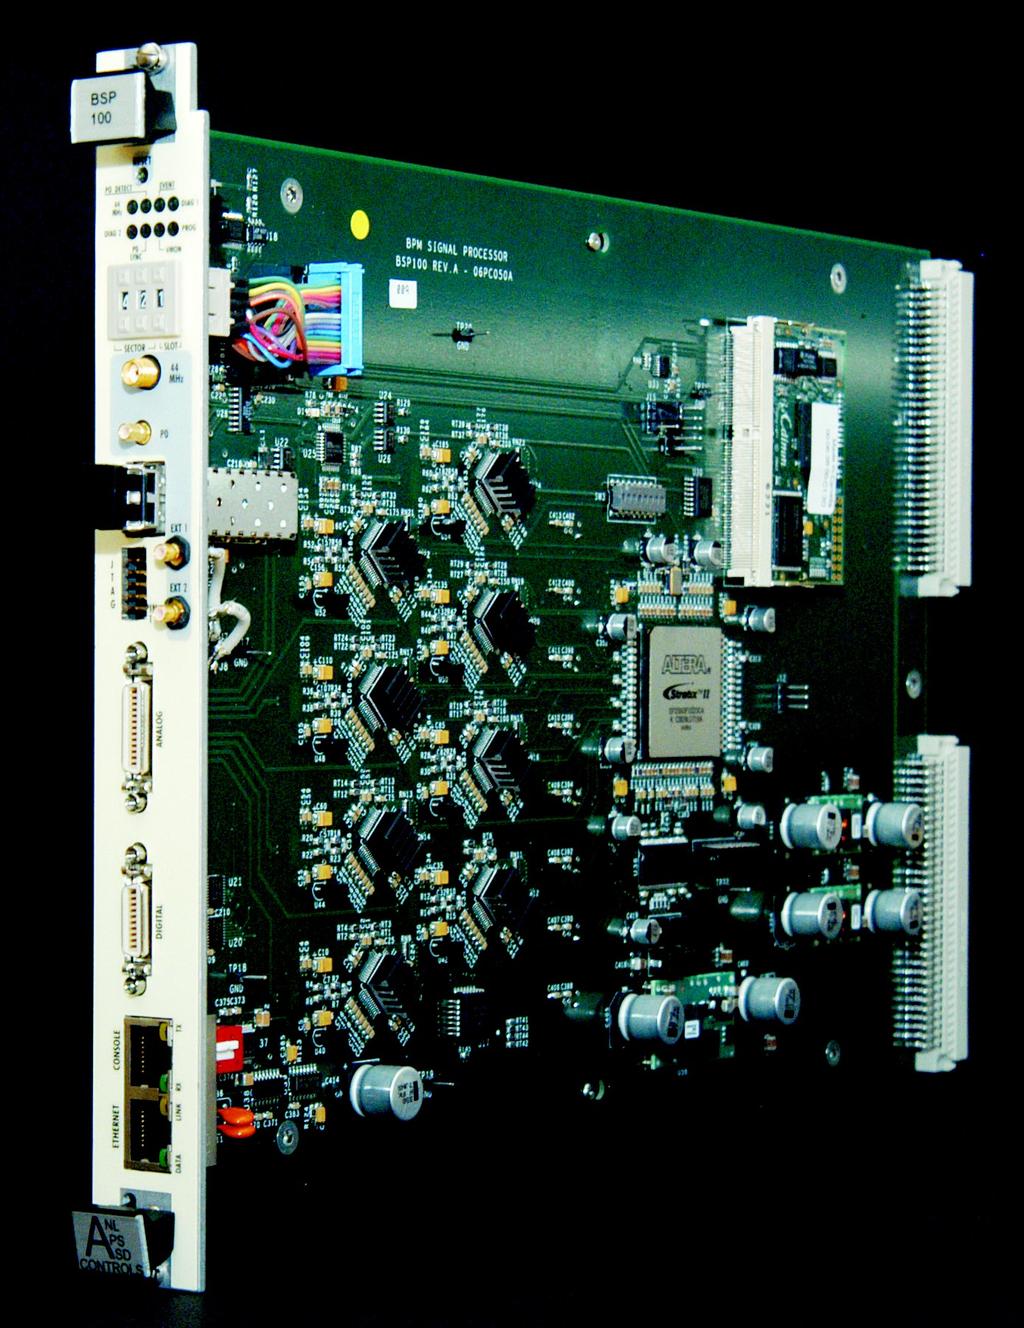 APS Broadband RF BPM data acquisition upgrade Eight channels/board, 88 MS/sec sampling. Altera FPGA processing.